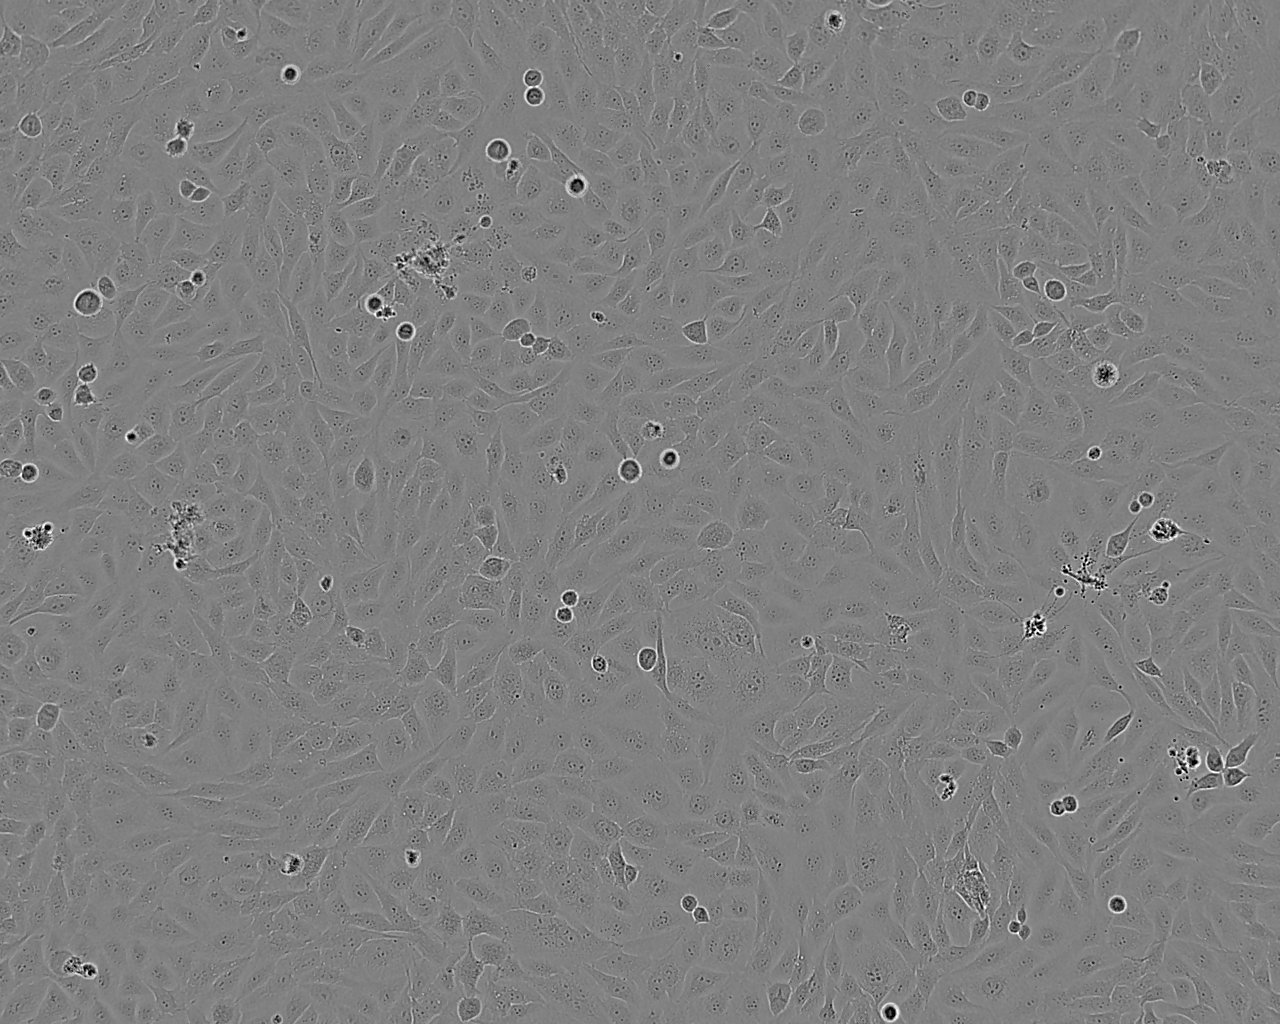 NBL-S epithelioid cells人神经母细胞系,NBL-S epithelioid cells